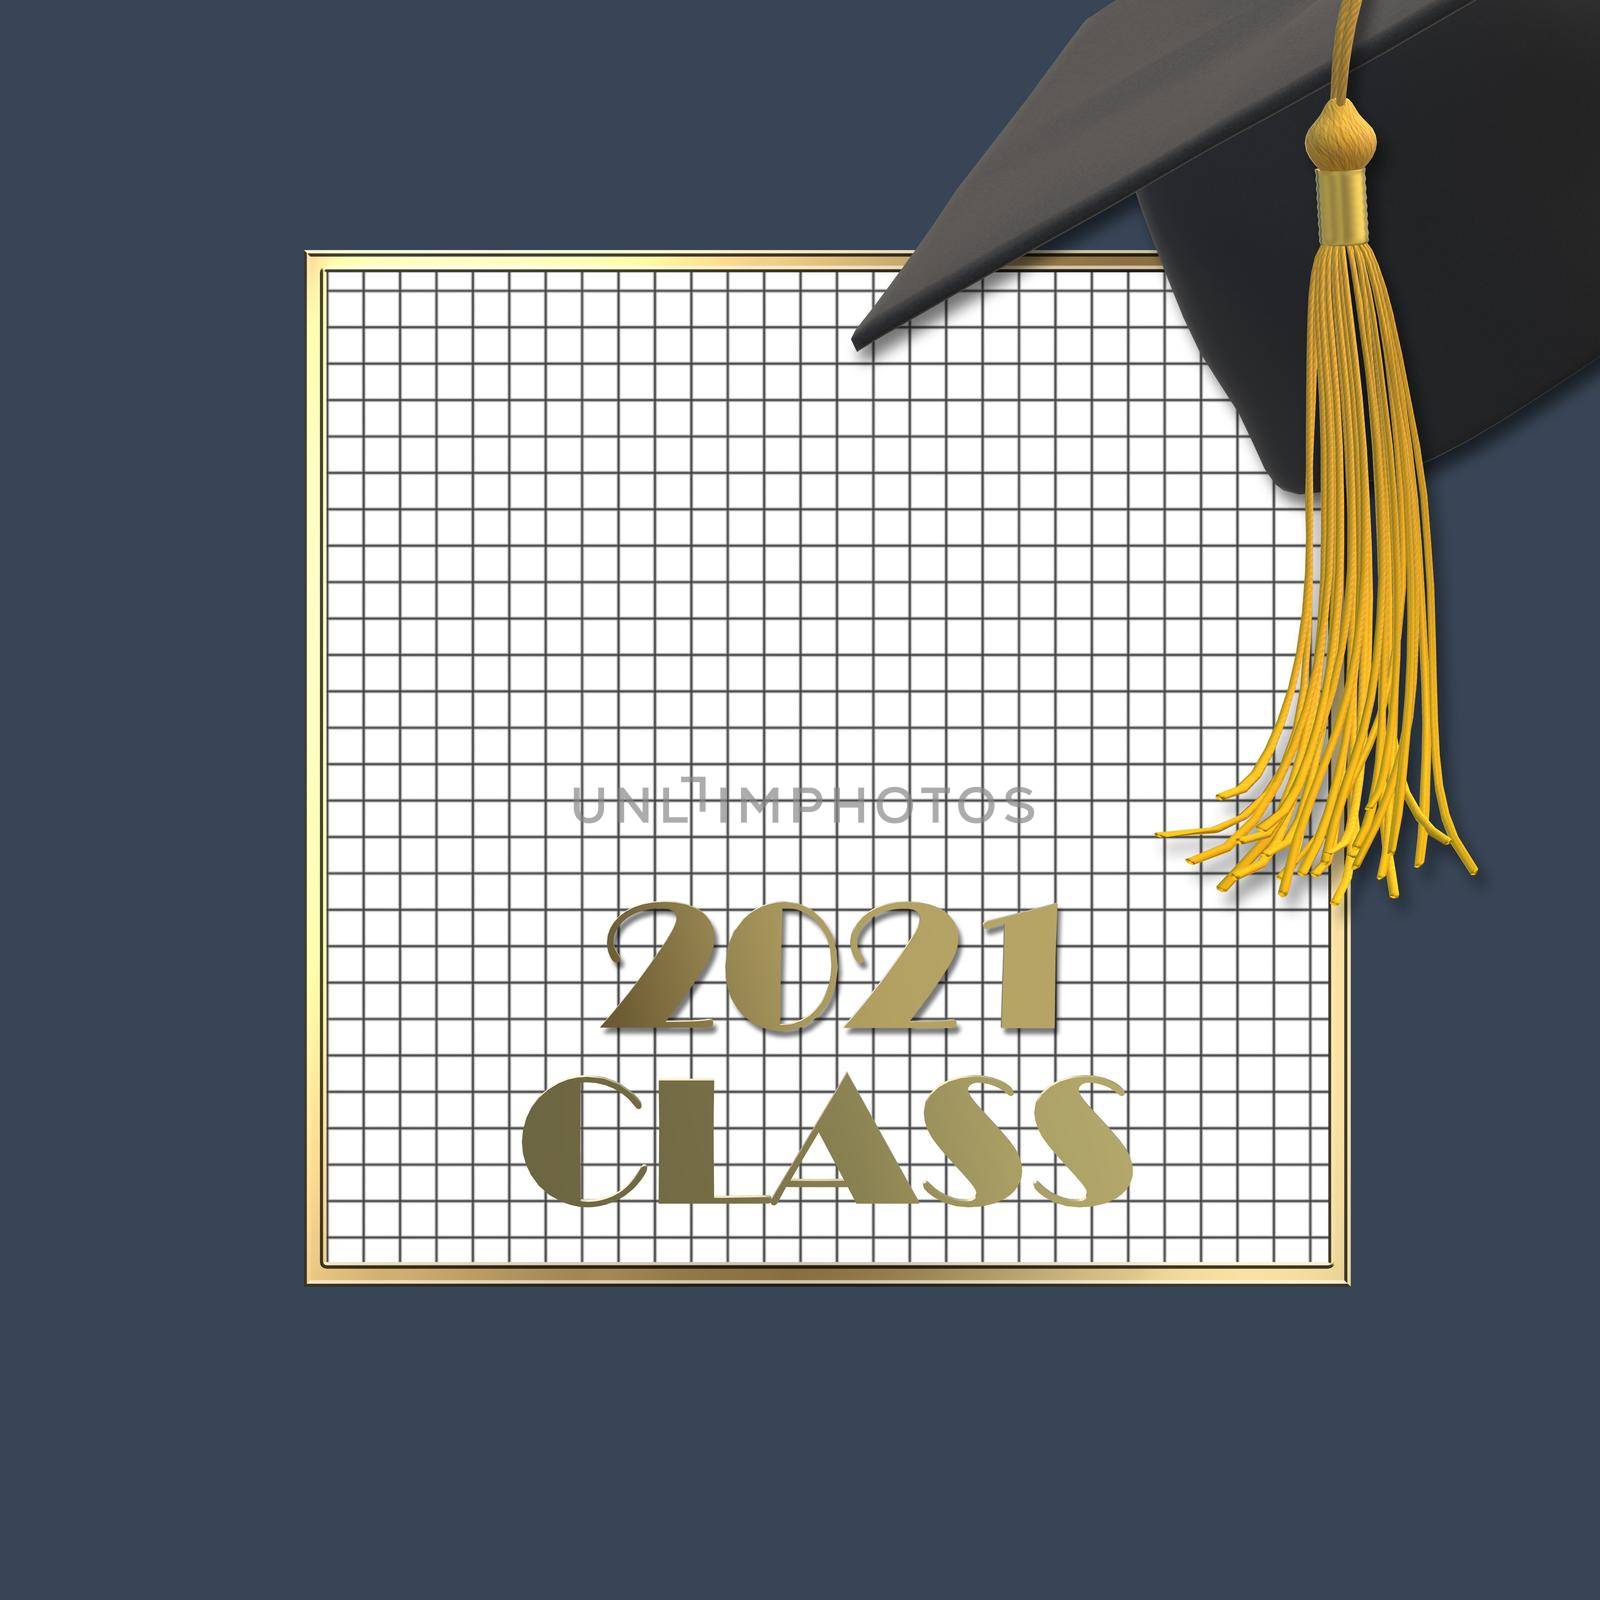 Graduation 2021 cap with tassel by NelliPolk